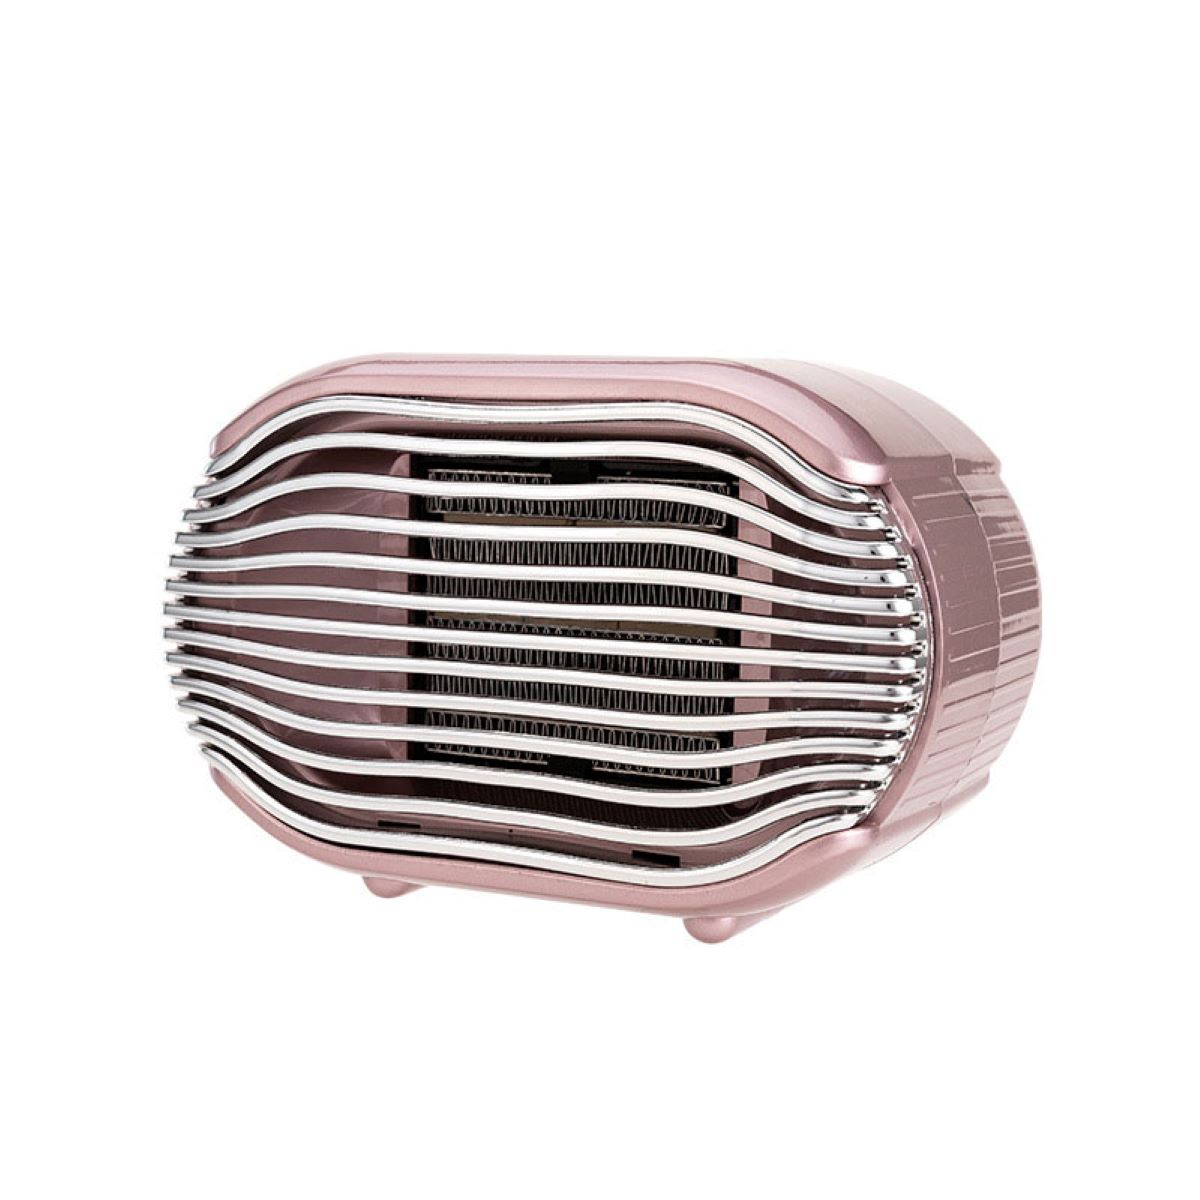 Wärme 10 PTC-Keramik-Heizung - schnelle Wärme, Raumgröße: Rosa (800 Watt, m²) LACAMAX leise Heizlüfter